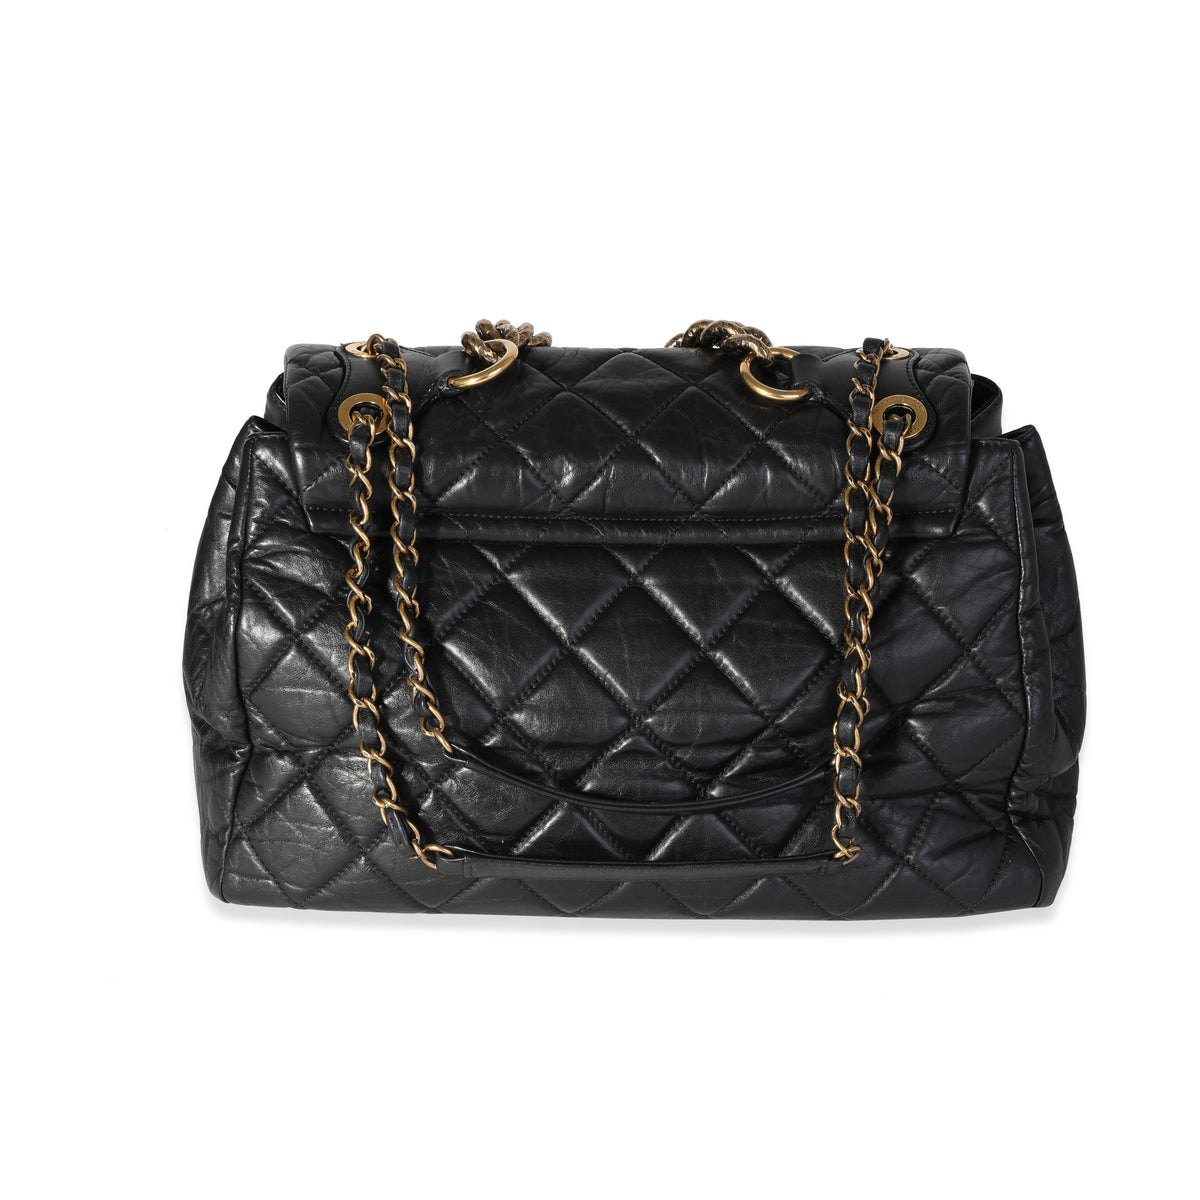 Chanel Paris-Bombay Black Aged Quilted Calfskin Pondicherry Flap Bag